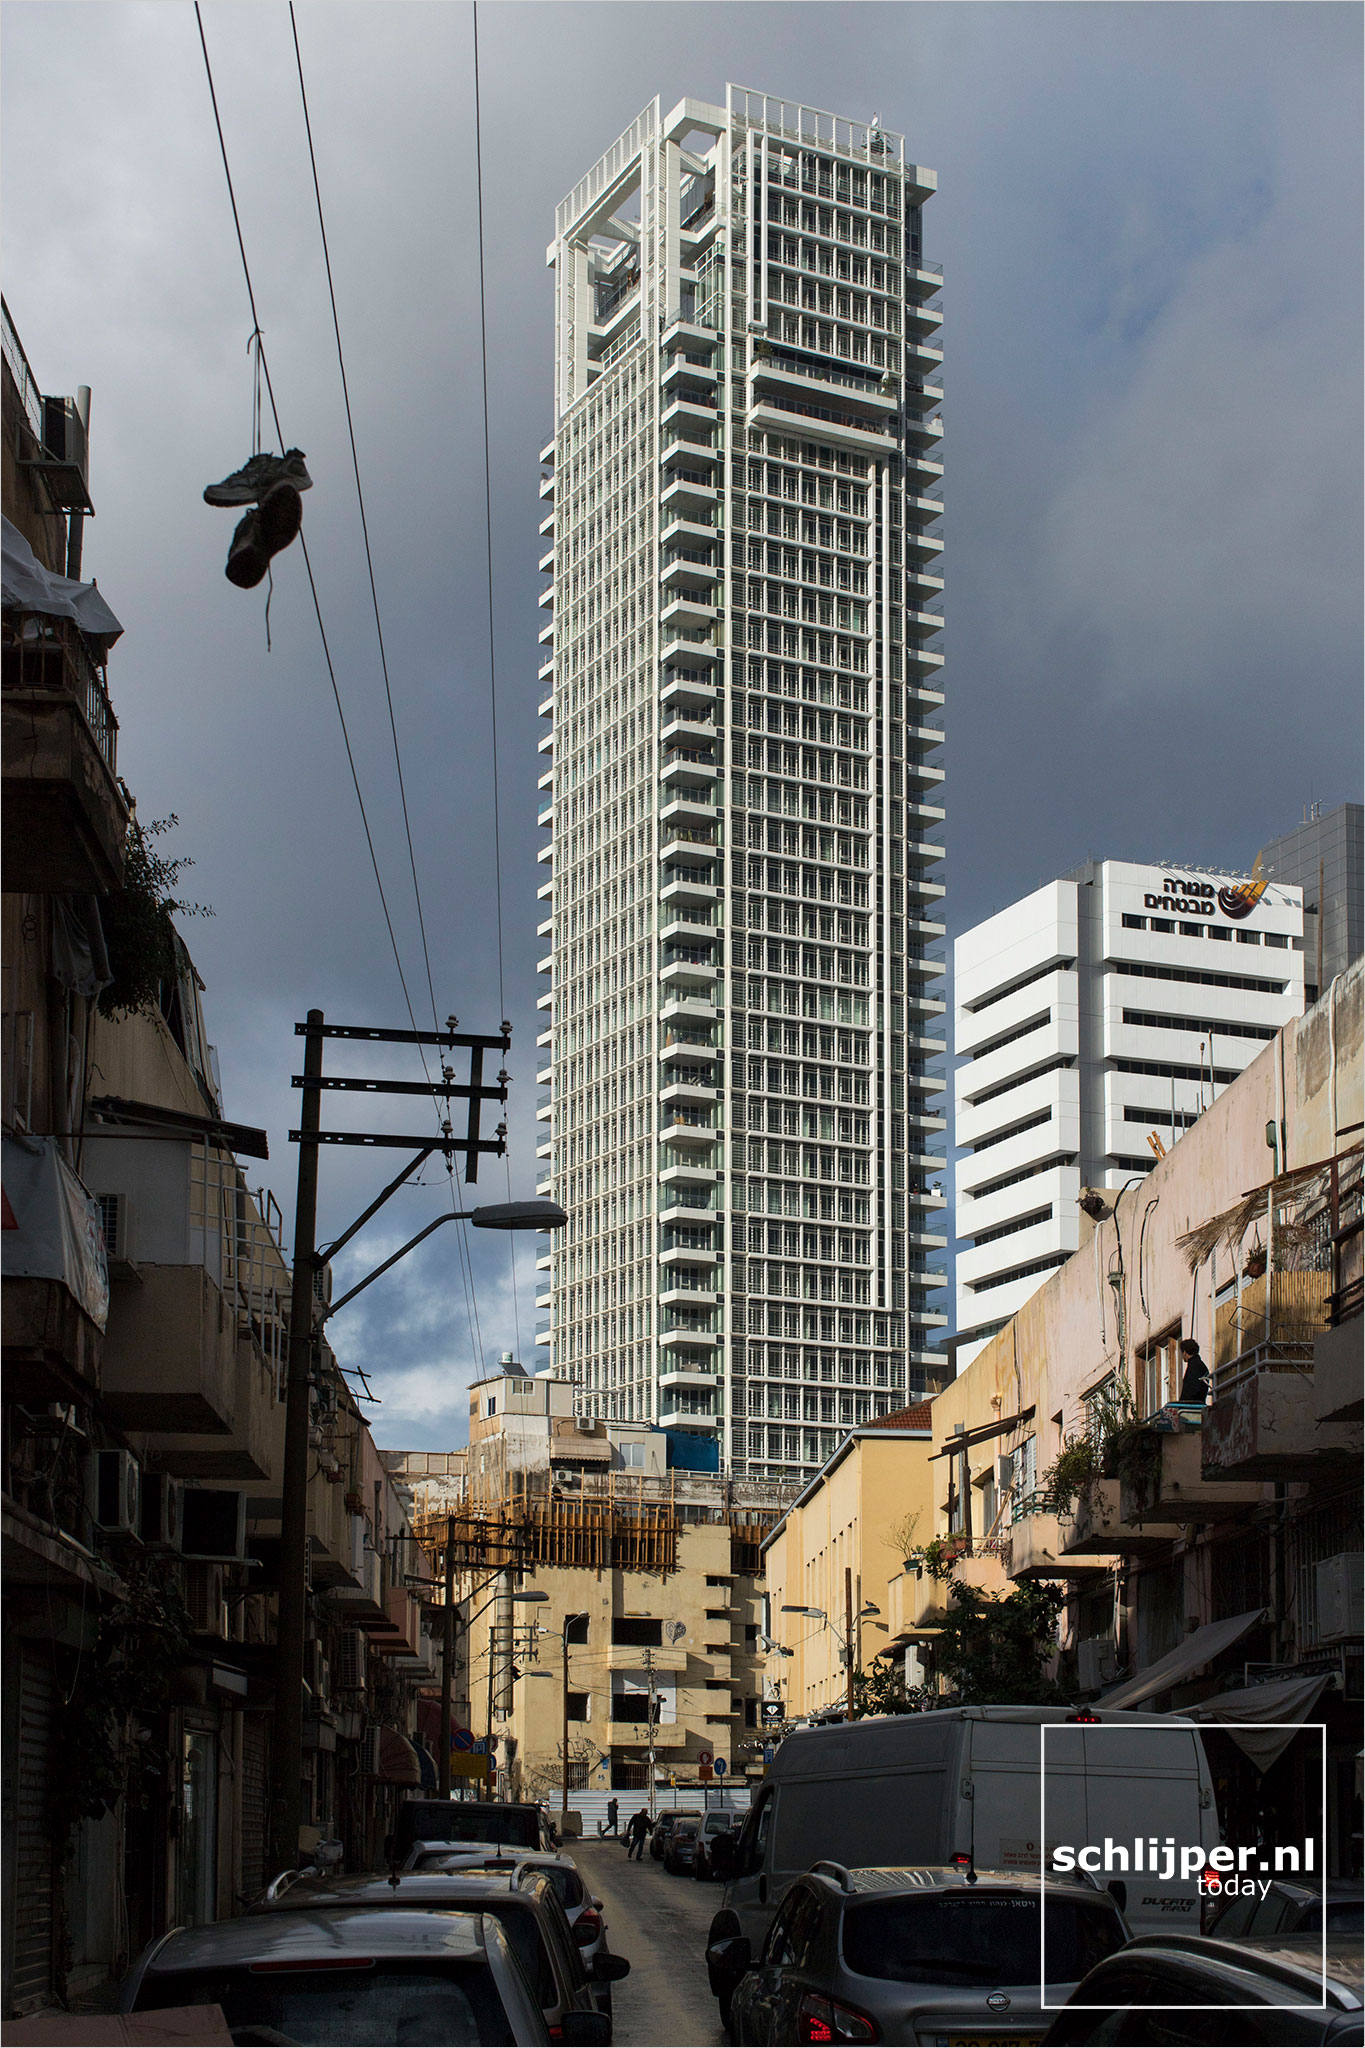 Israel, Tel Aviv, 1 januari 2018